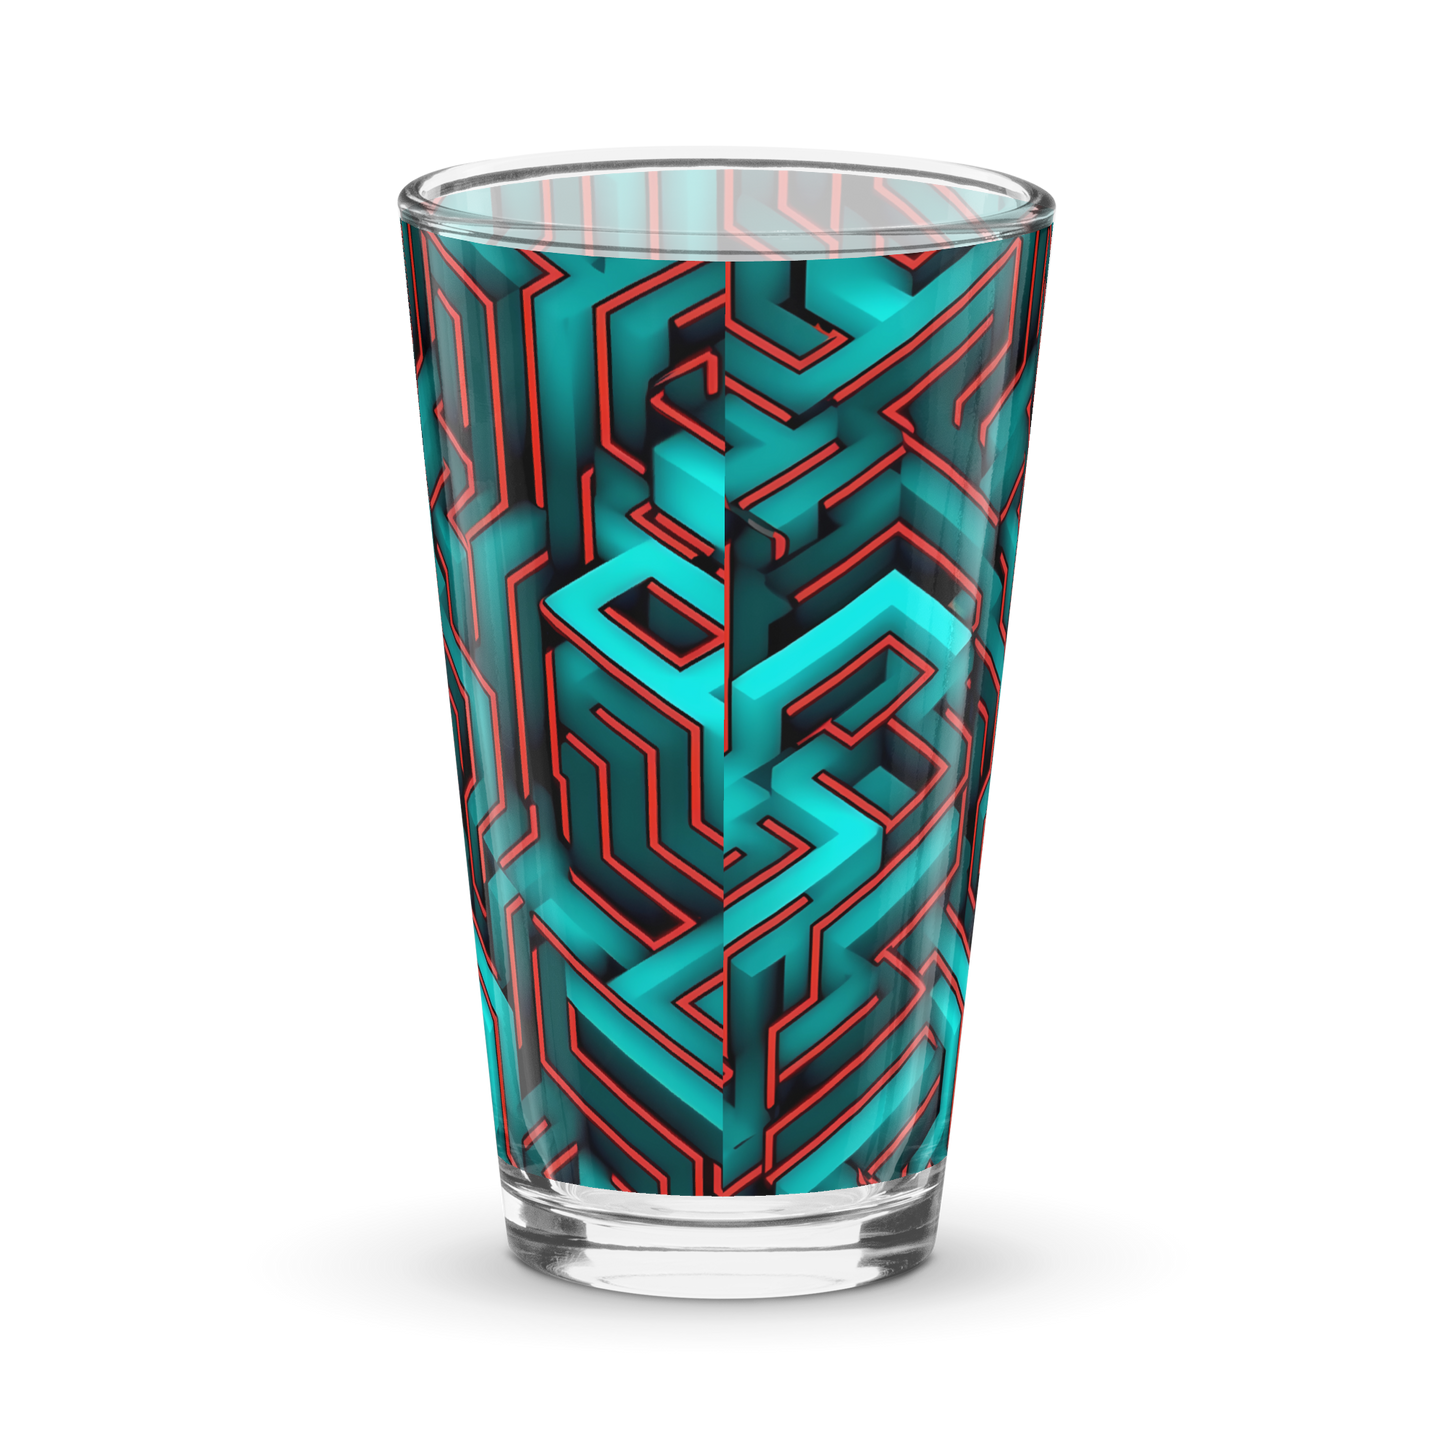 3D Maze Illusion | 3D Patterns | Shaker Pint Glass (16 oz) - #2